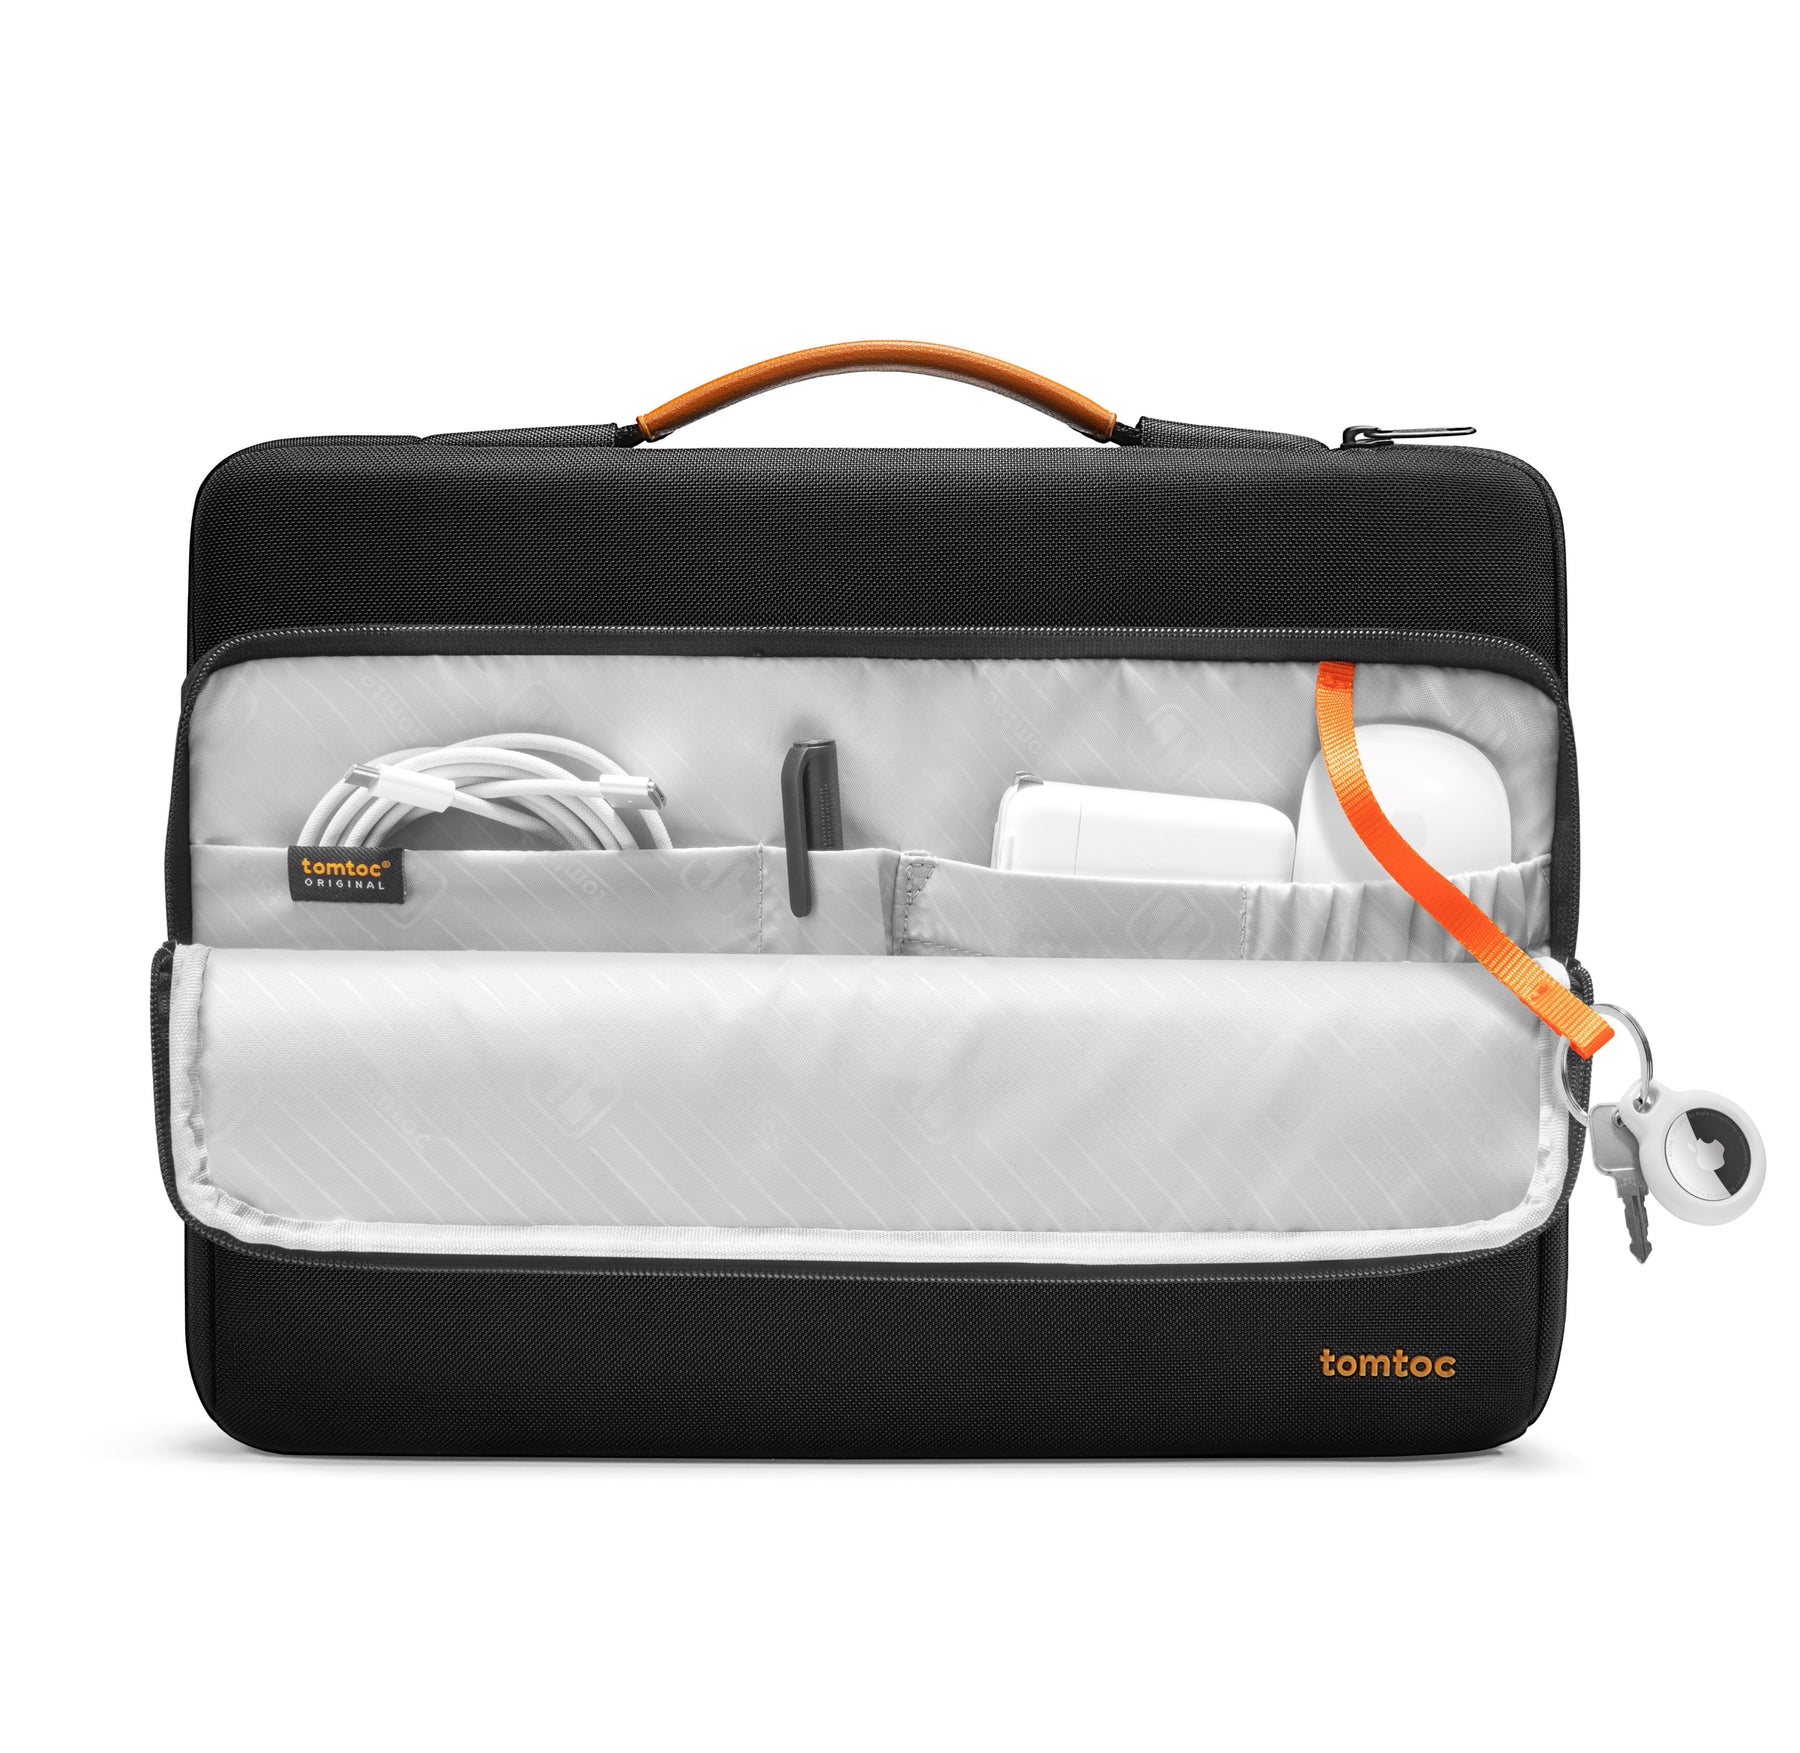 Defender-A14 Laptop Handbag 16-inch